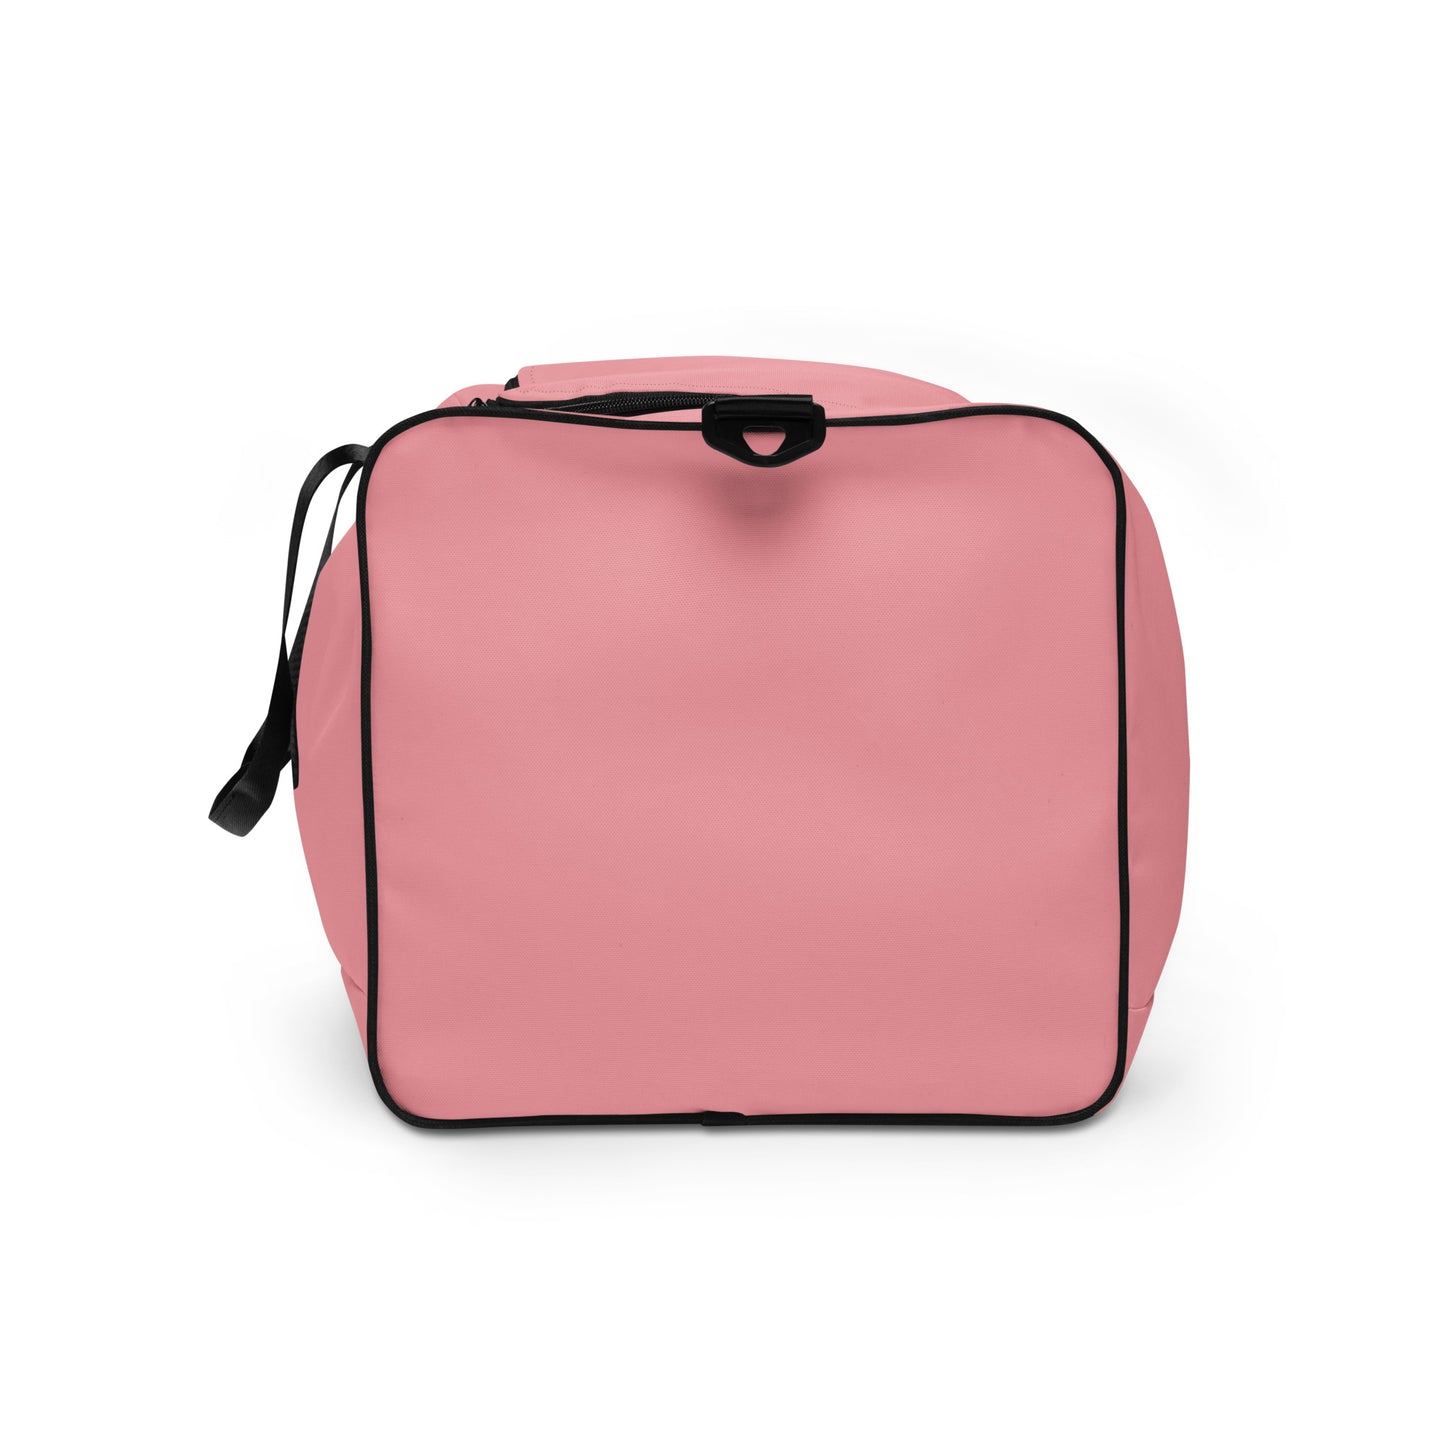 Light Pink Duffle Bag